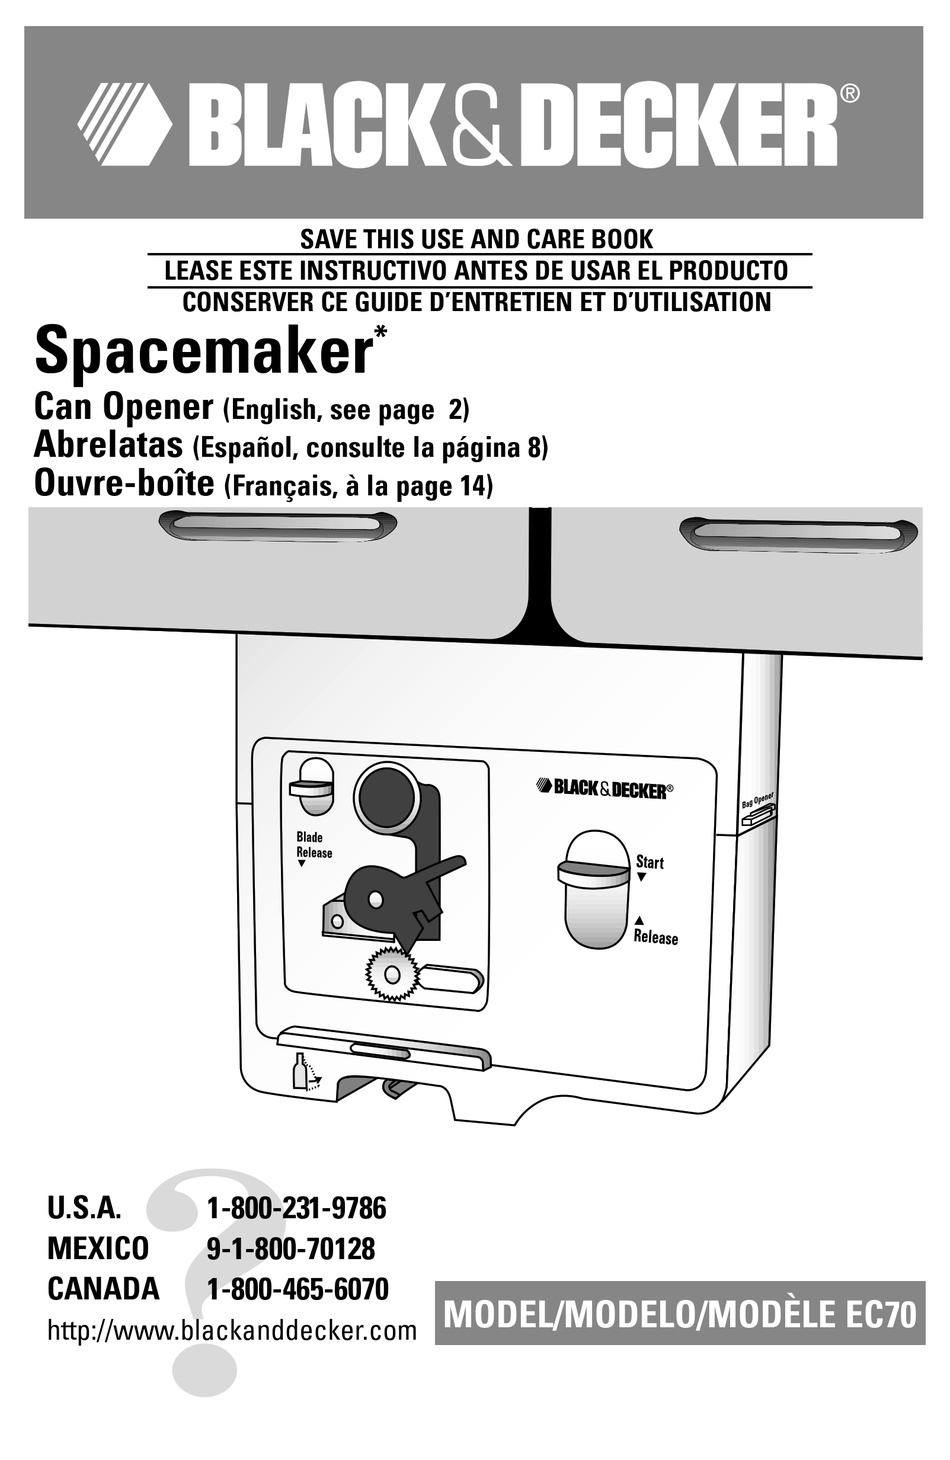 https://data2.manualslib.com/first-image/i1/2/165/16411/black-decker-spacemaker-ec70.png